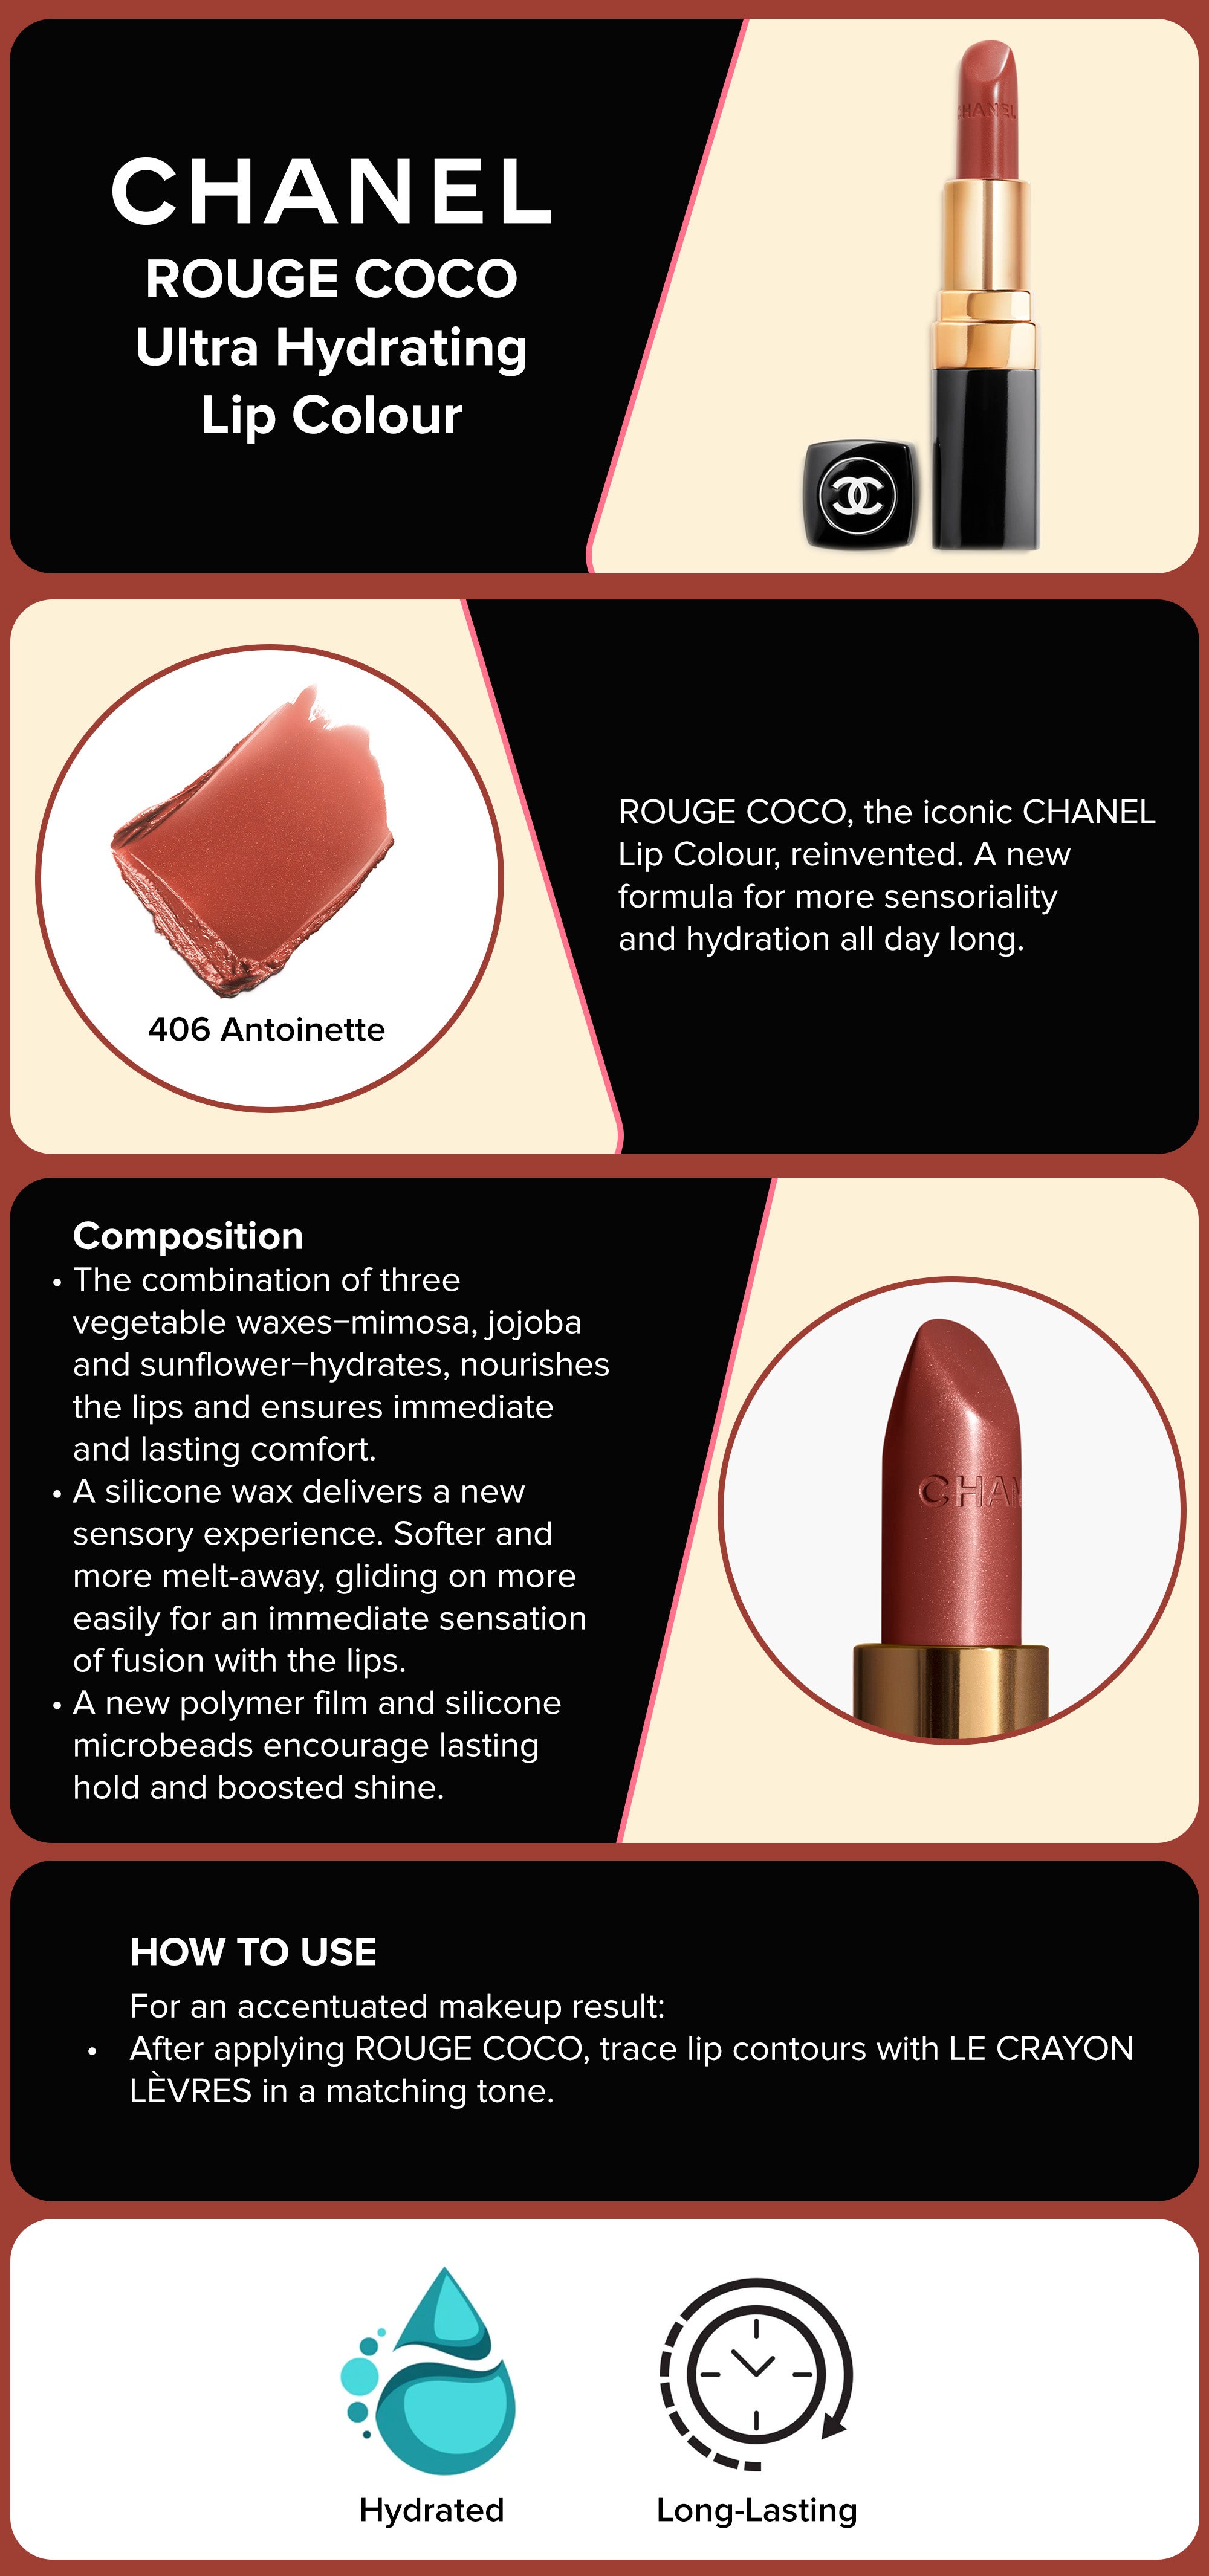 CHANEL ROUGE COCO Ultra Hydrating Lip Colour - LIPSTICKS